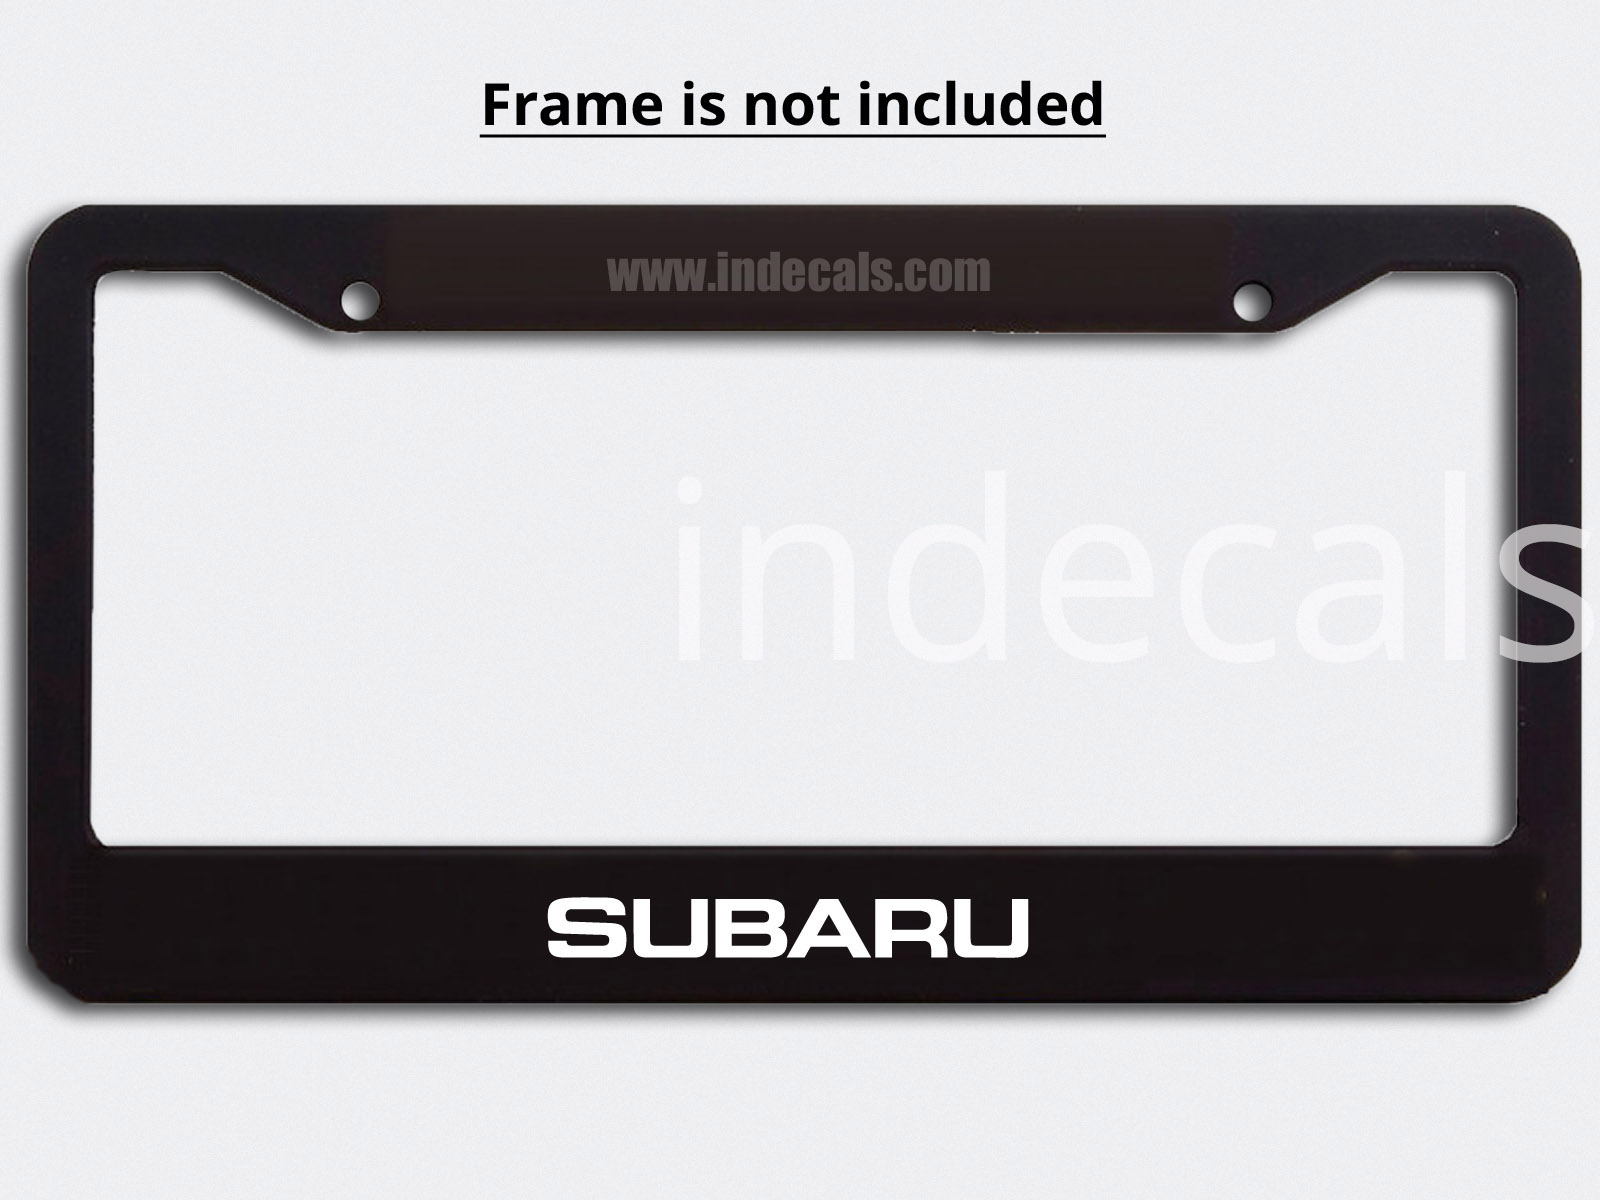 3 x Subaru Stickers for Plate Frame - White